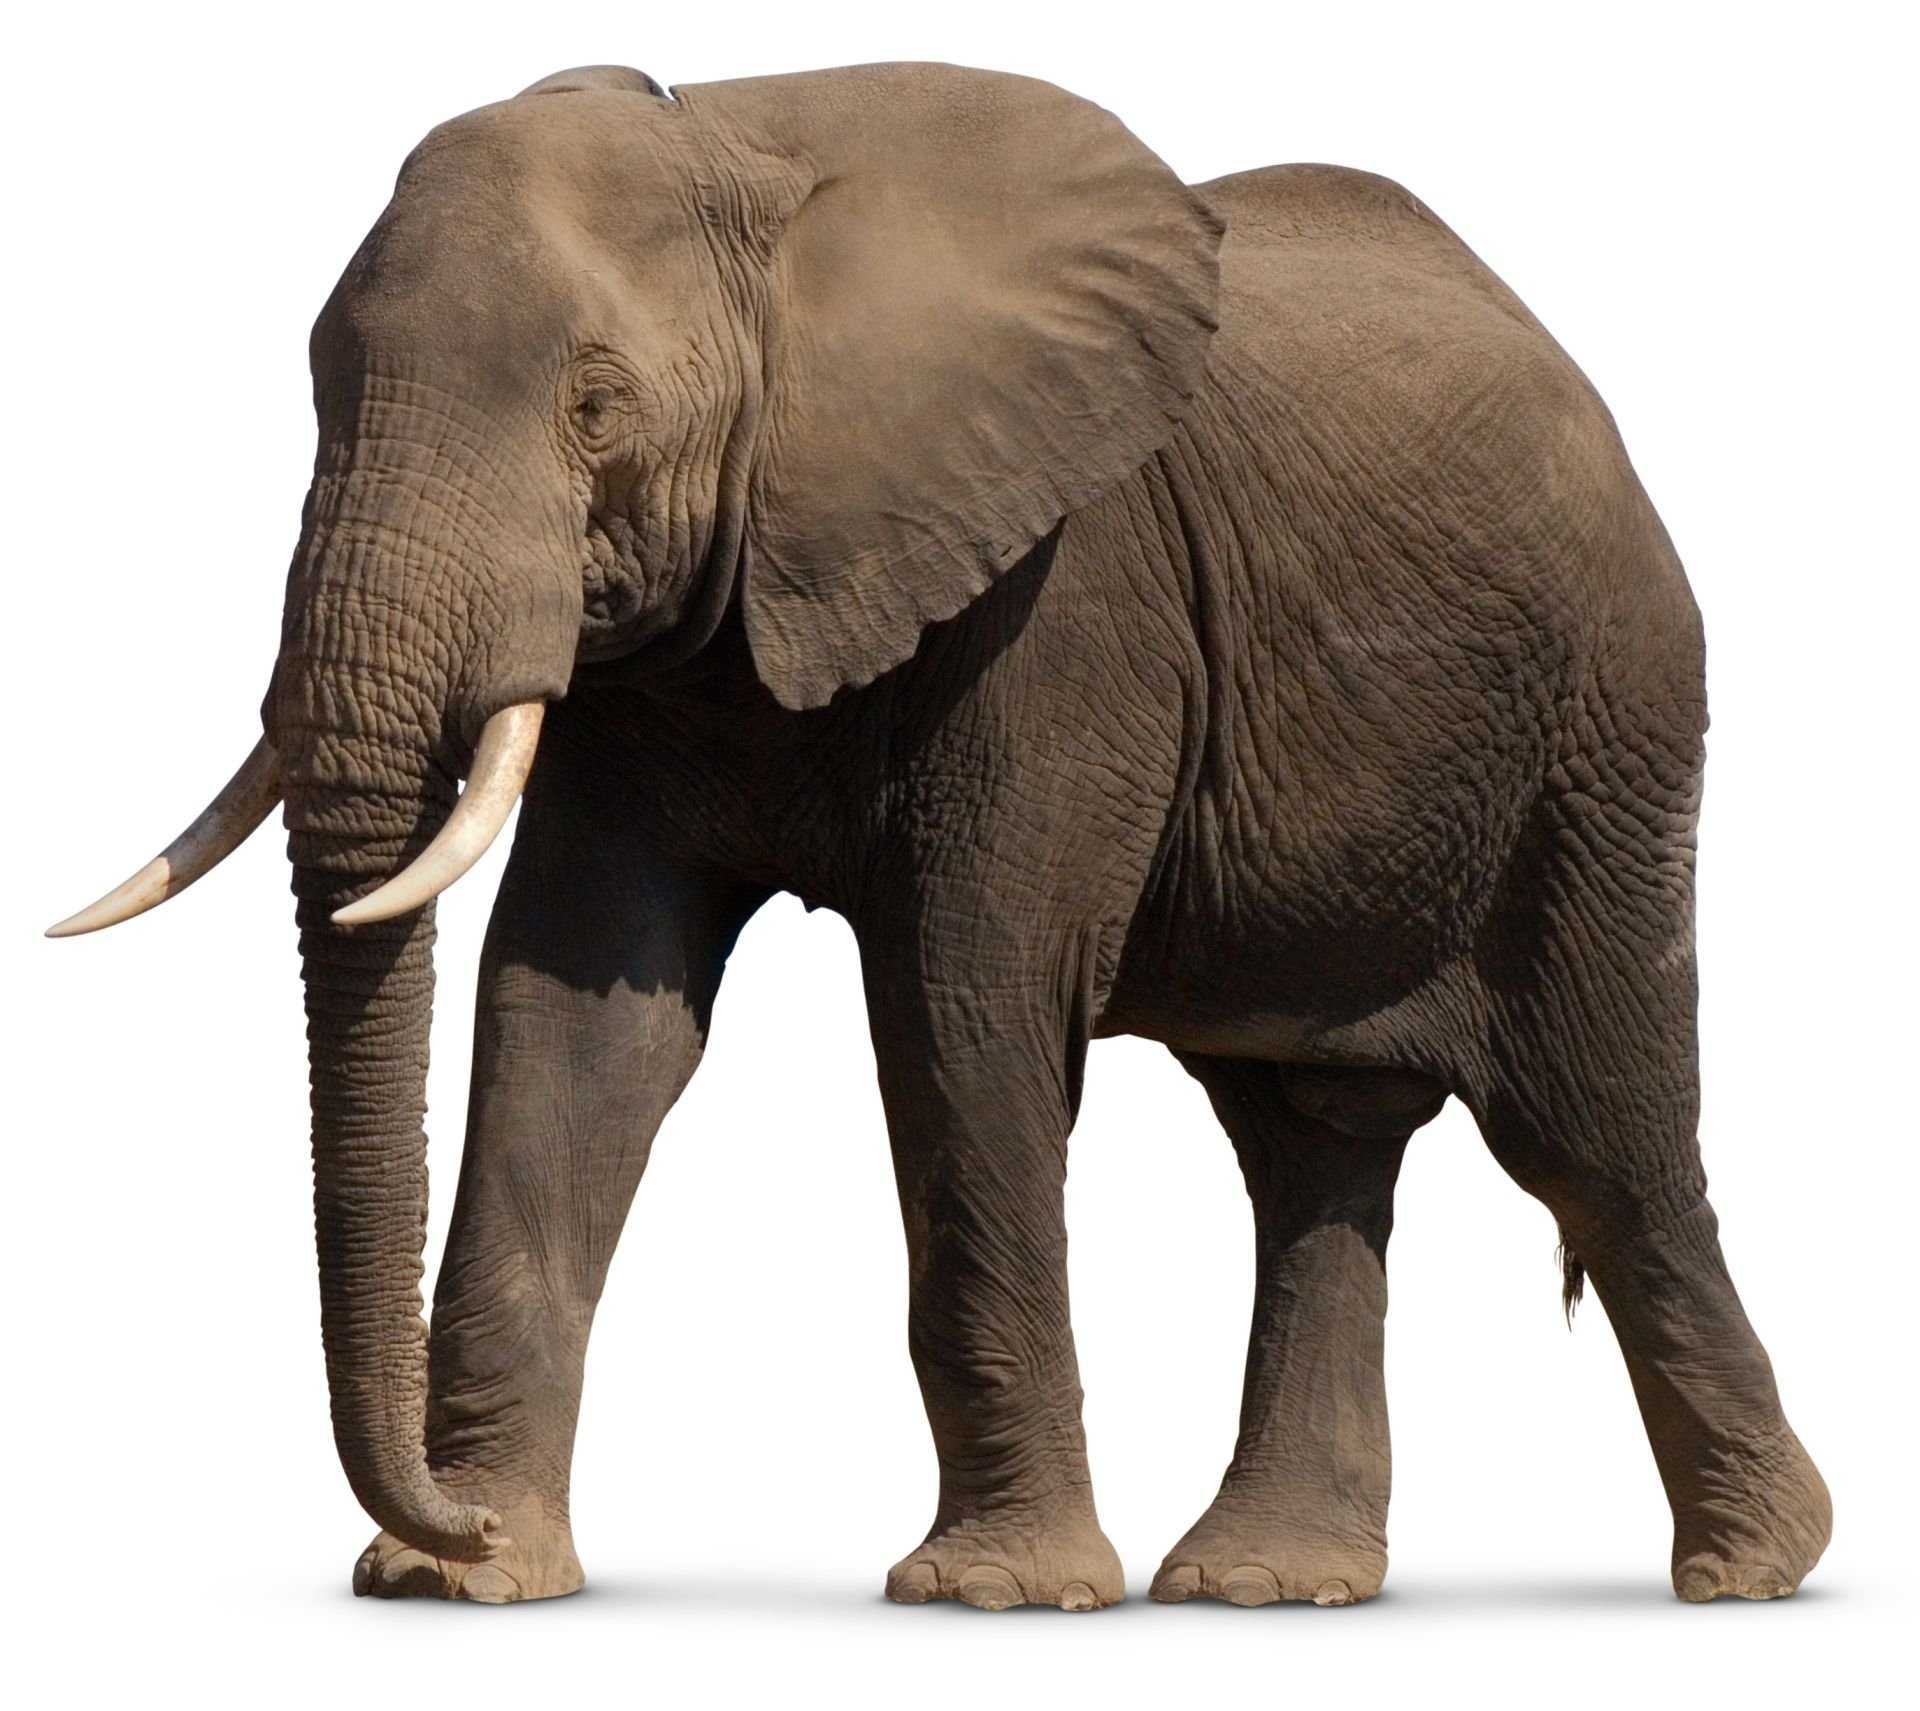 Картинка слона для детей на прозрачном фоне. Слон. Слон на белом фоне. Африканский слон. Слон на прозрачном фоне.